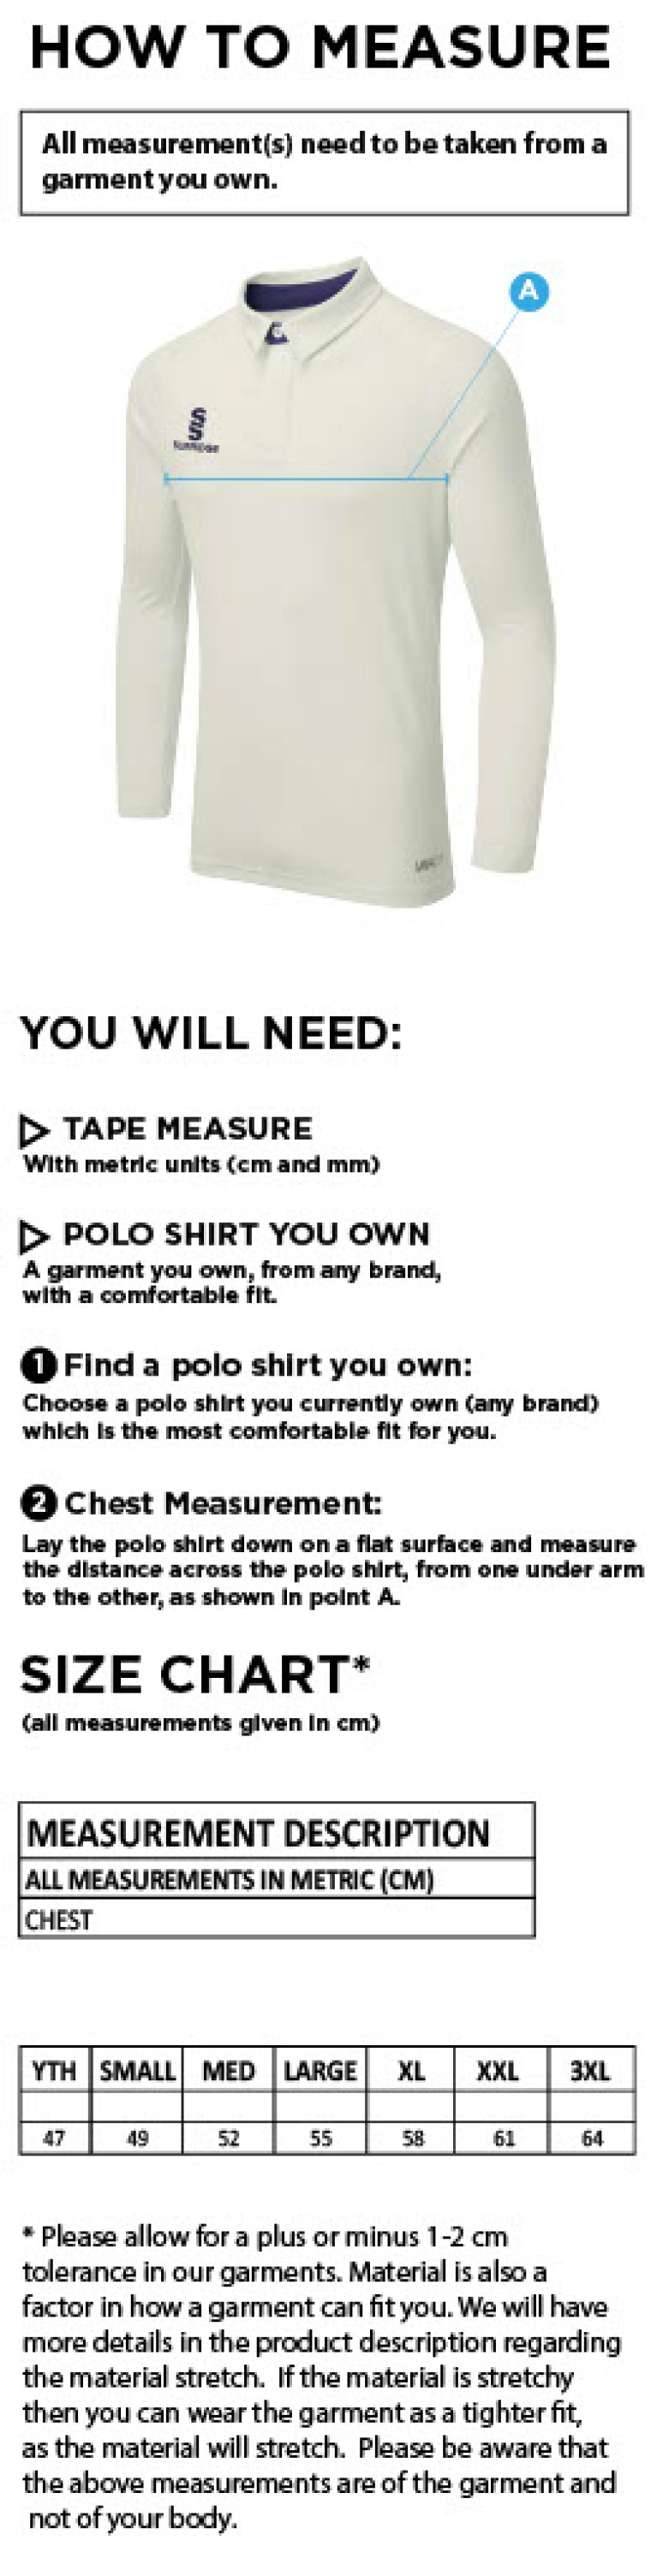 Maori Oxshott CC - Ergo L/S Shirt - Size Guide